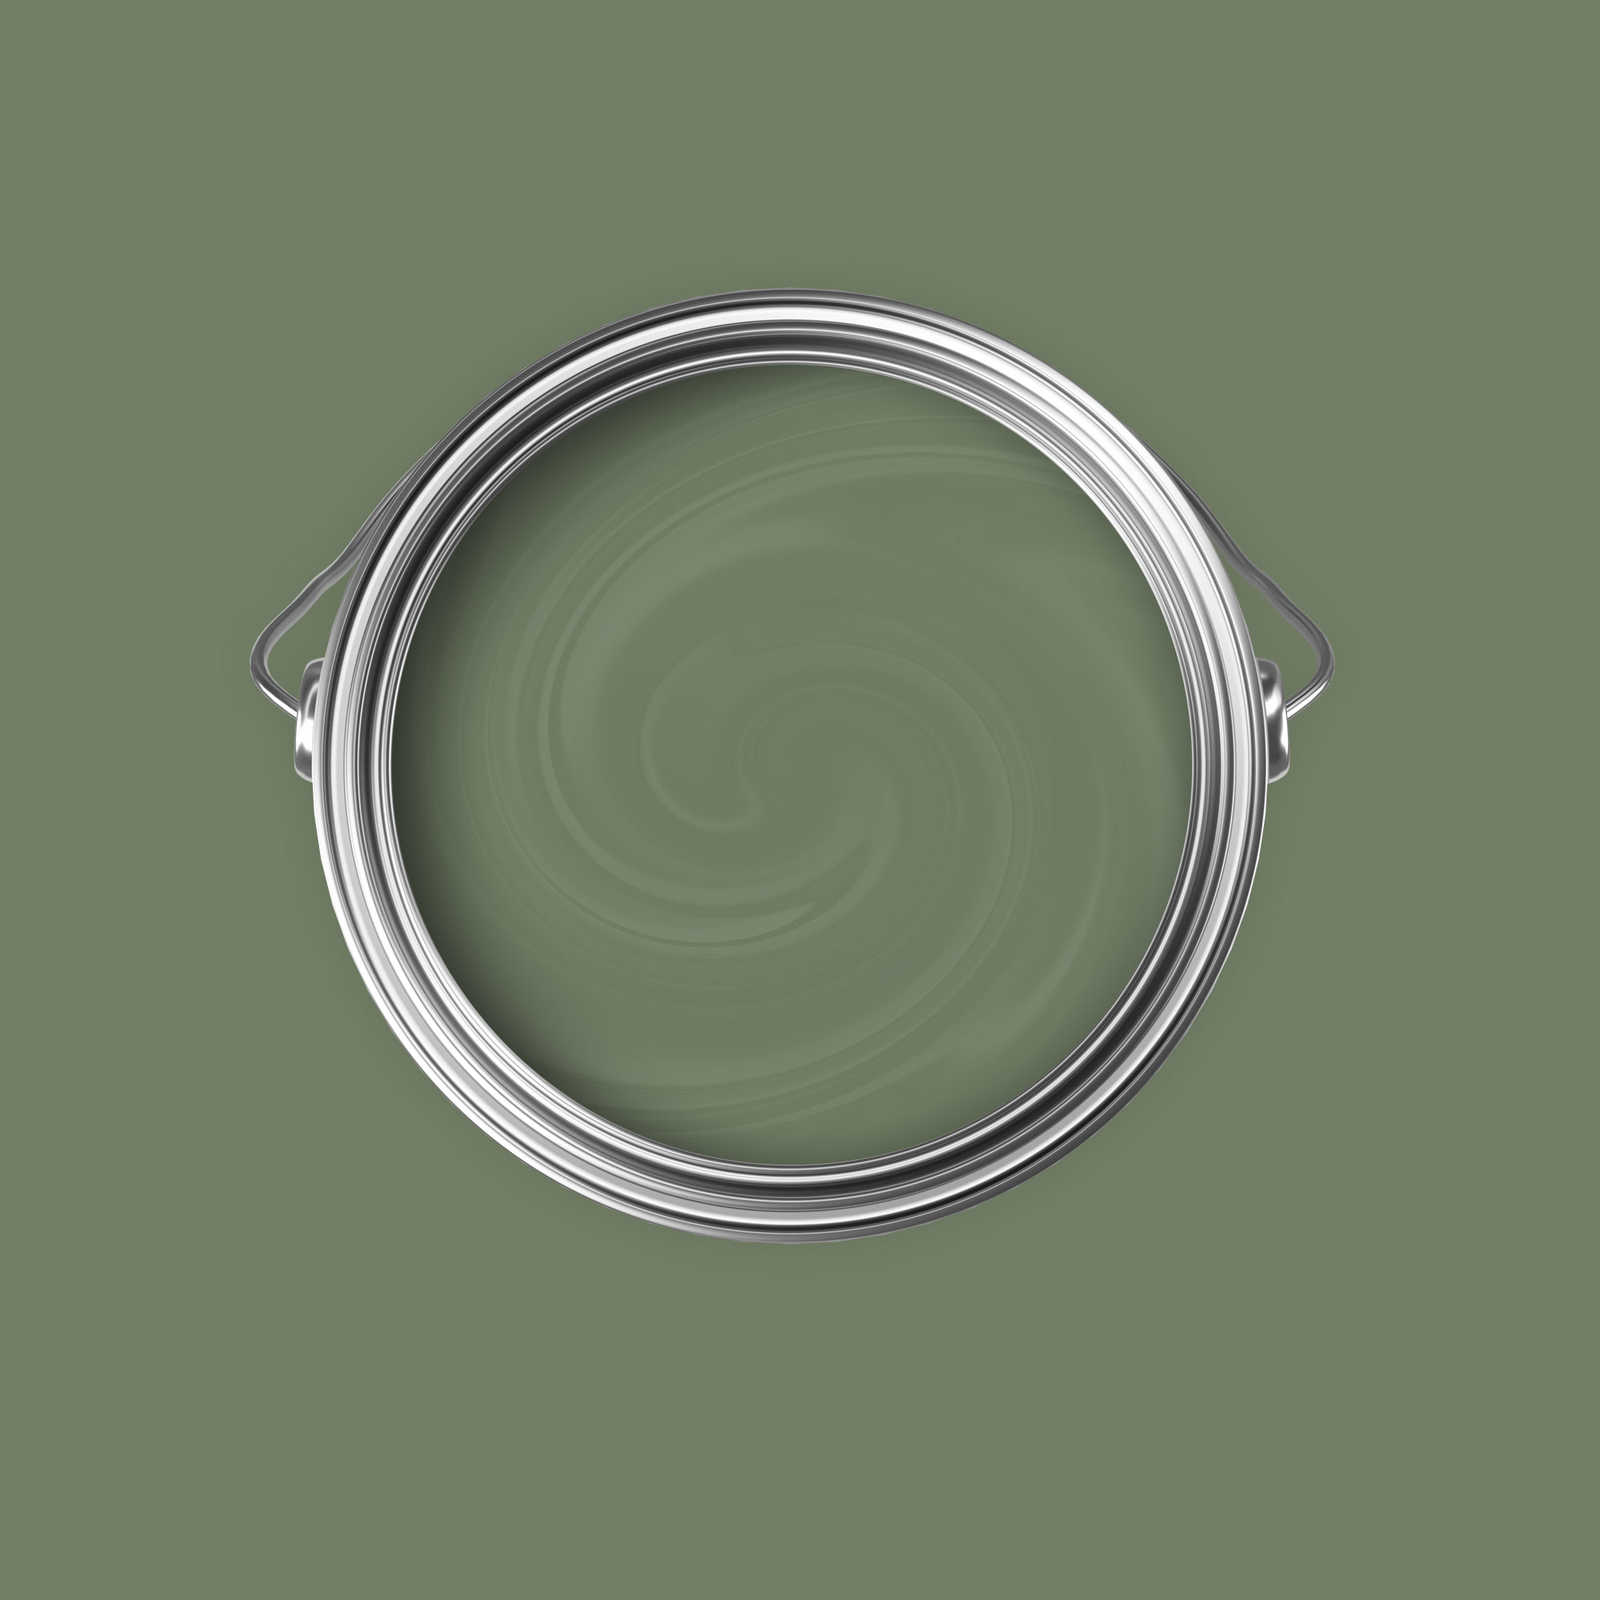             Premium Wandfarbe entspannendes Olivgrün »Gorgeous Green« NW504 – 5 Liter
        